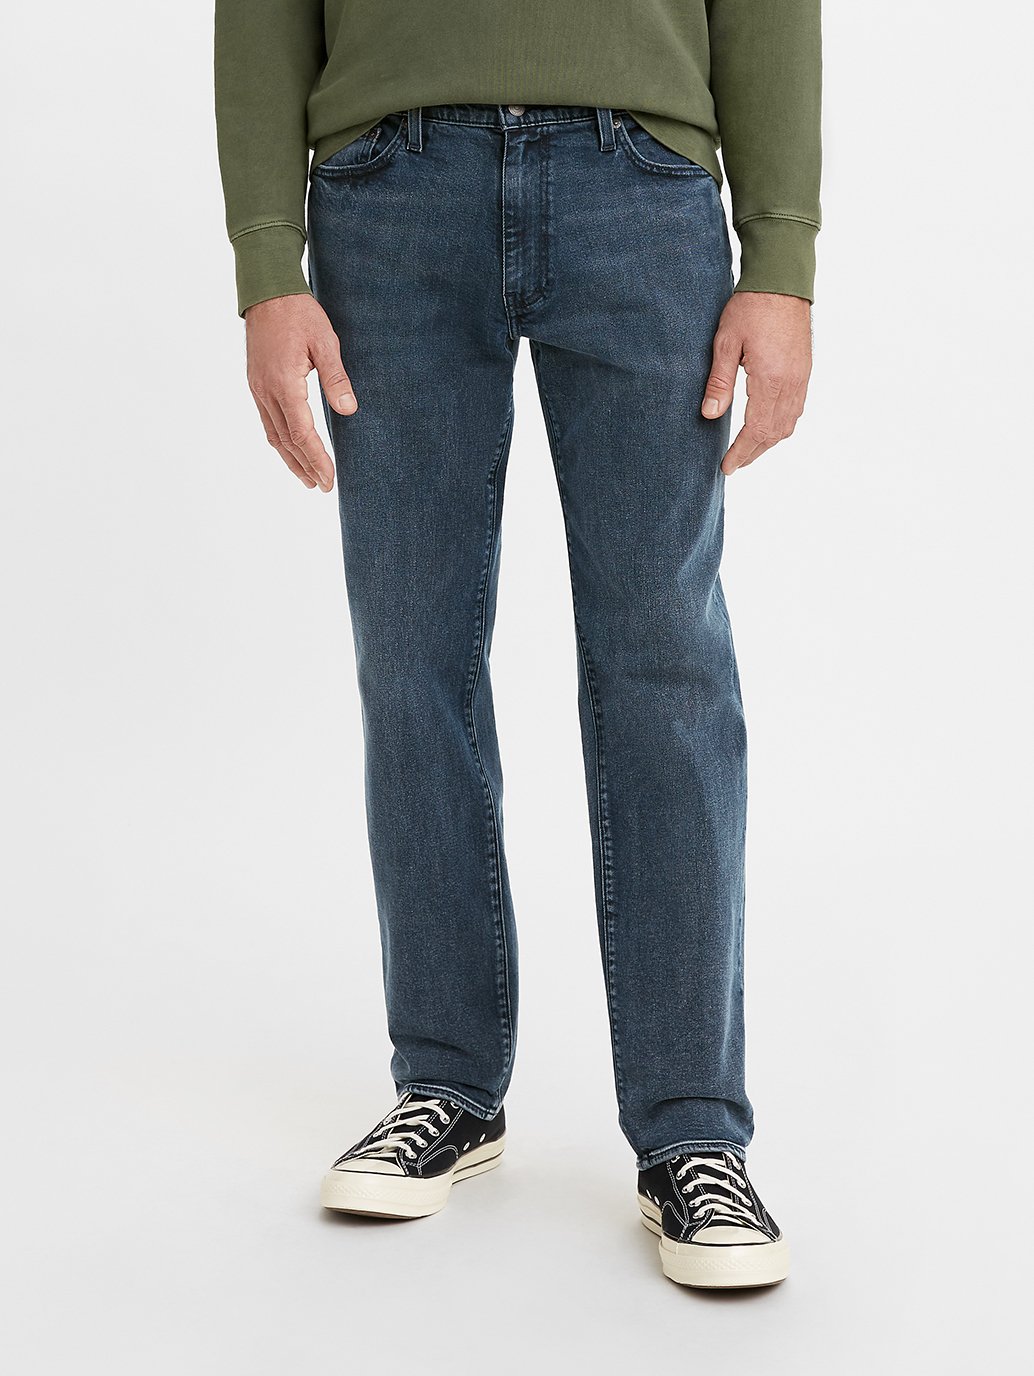 NZ-13071 Slim-fit Stretchable Denim Jeans Pant For Men - Deep Black |  PRISTINE-cheohanoi.vn